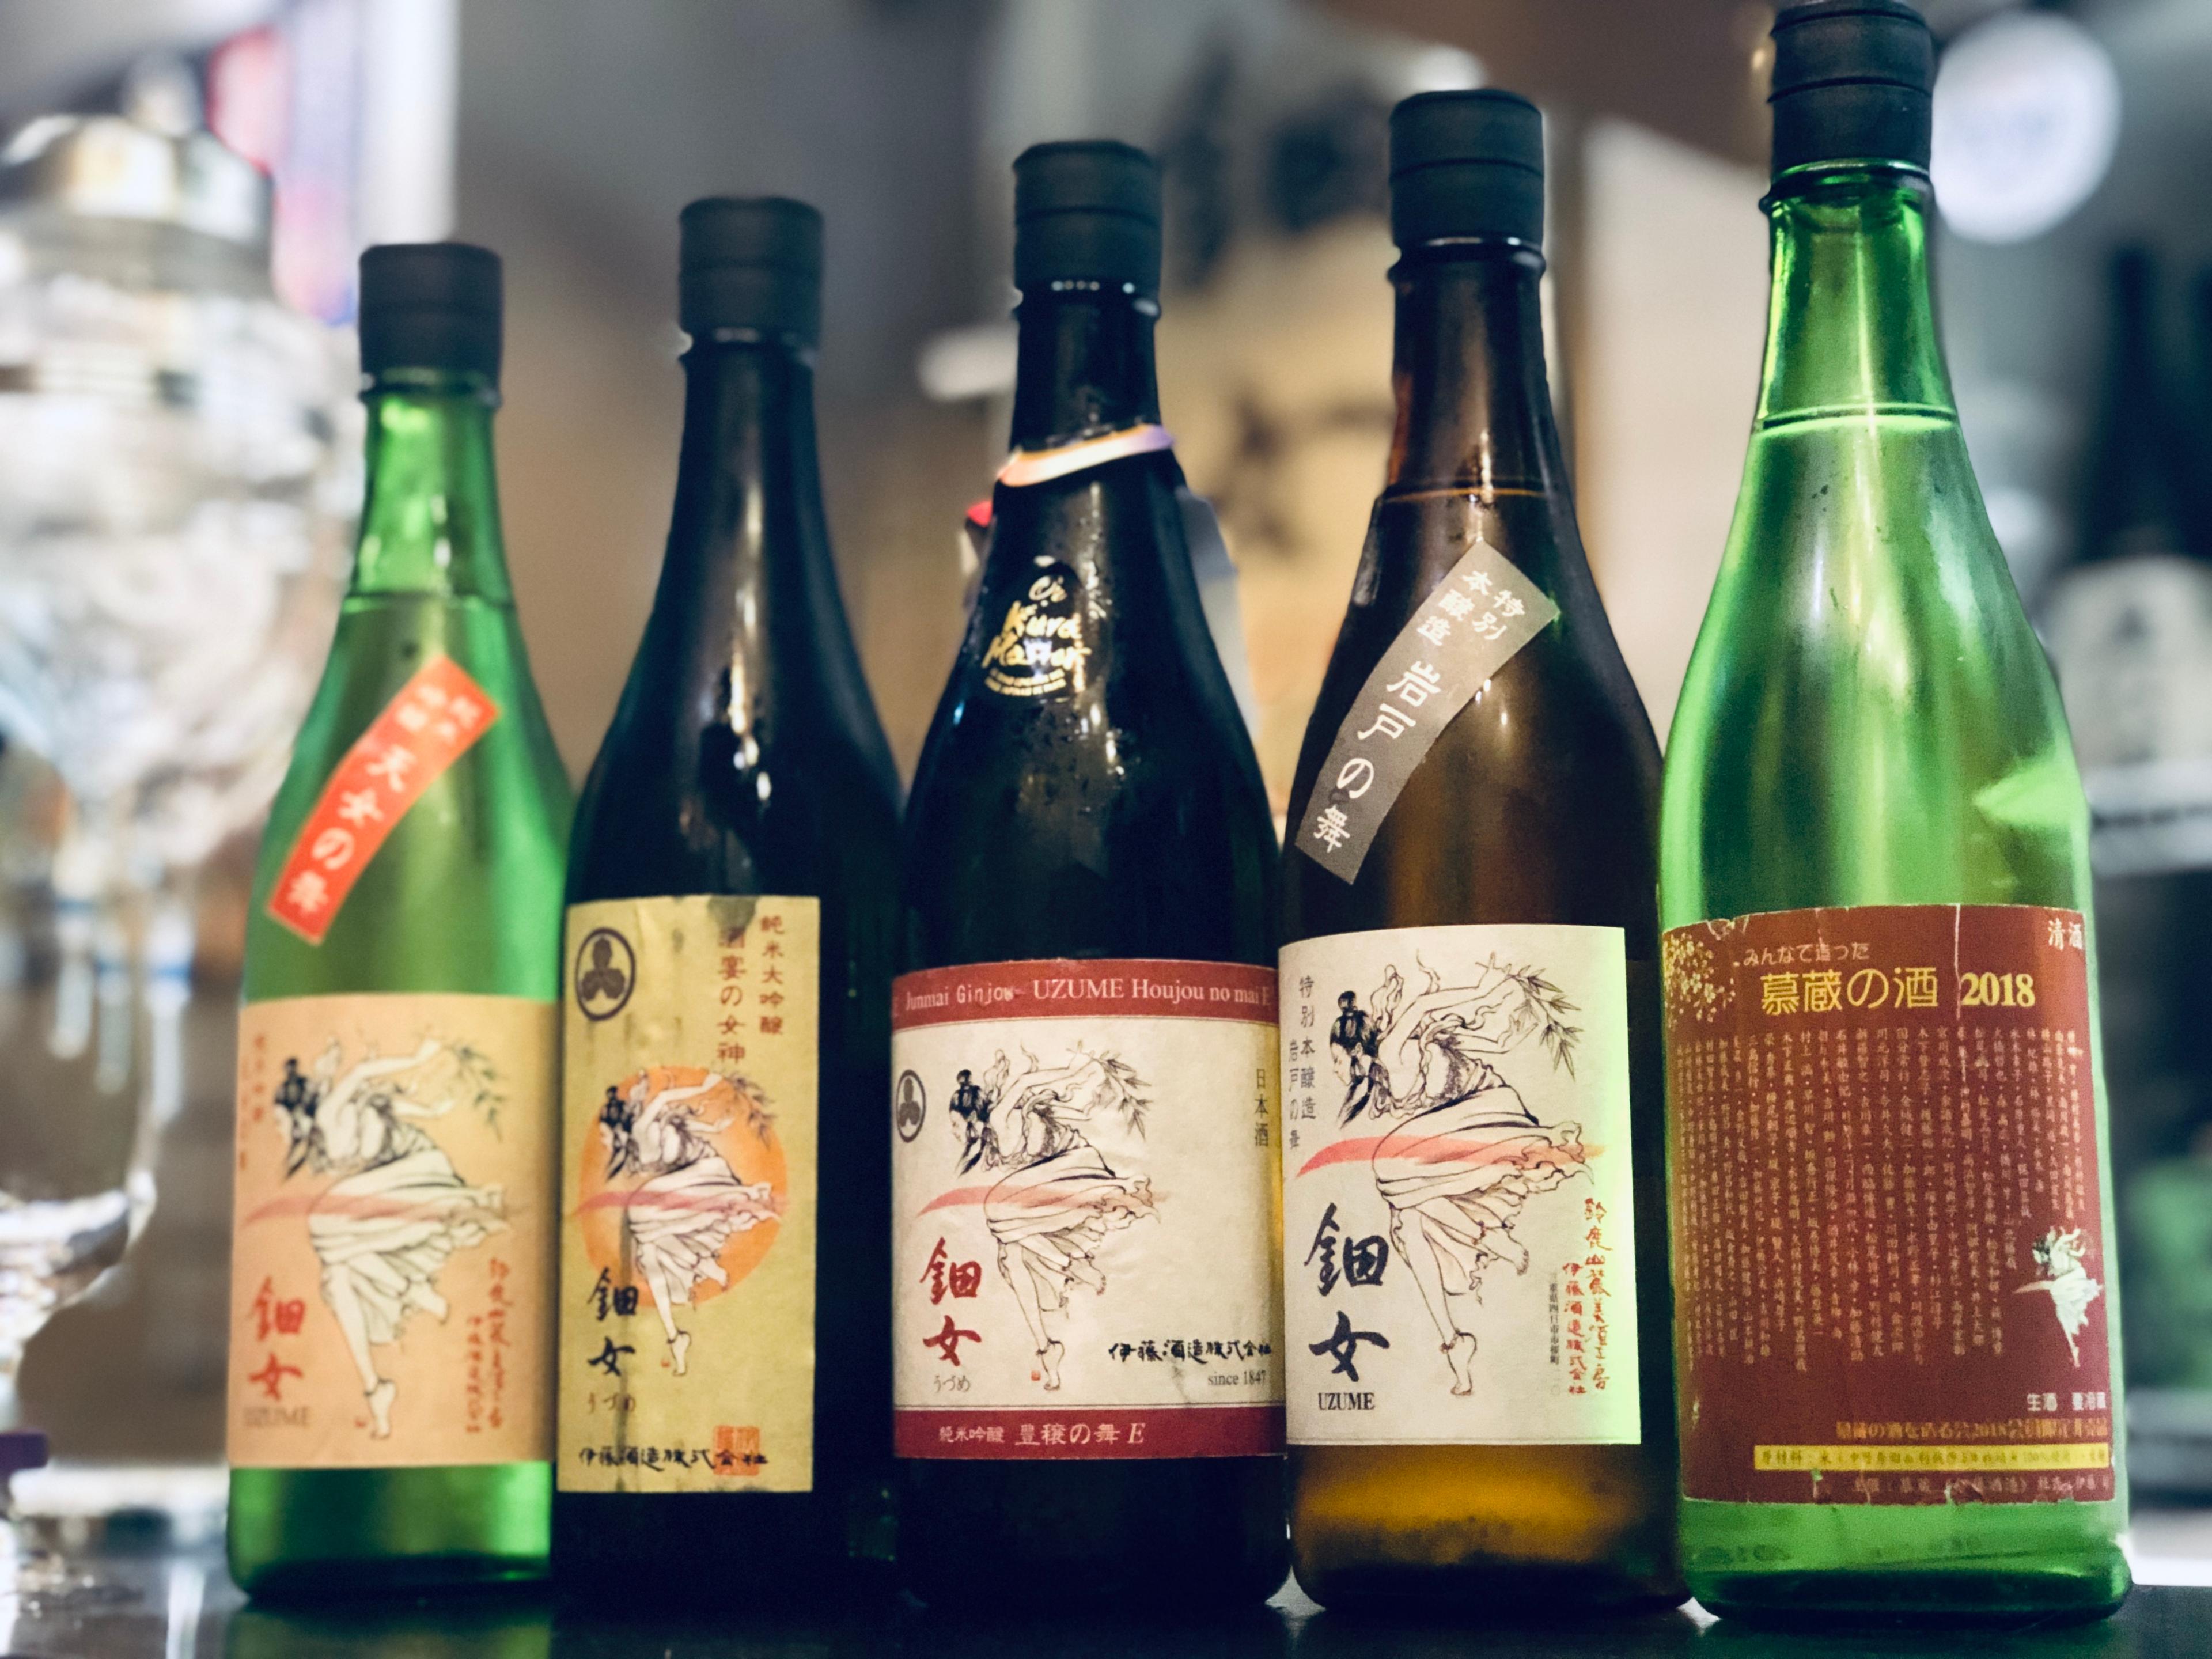 日本酒の光明女神 - WineNow HK 專欄文章